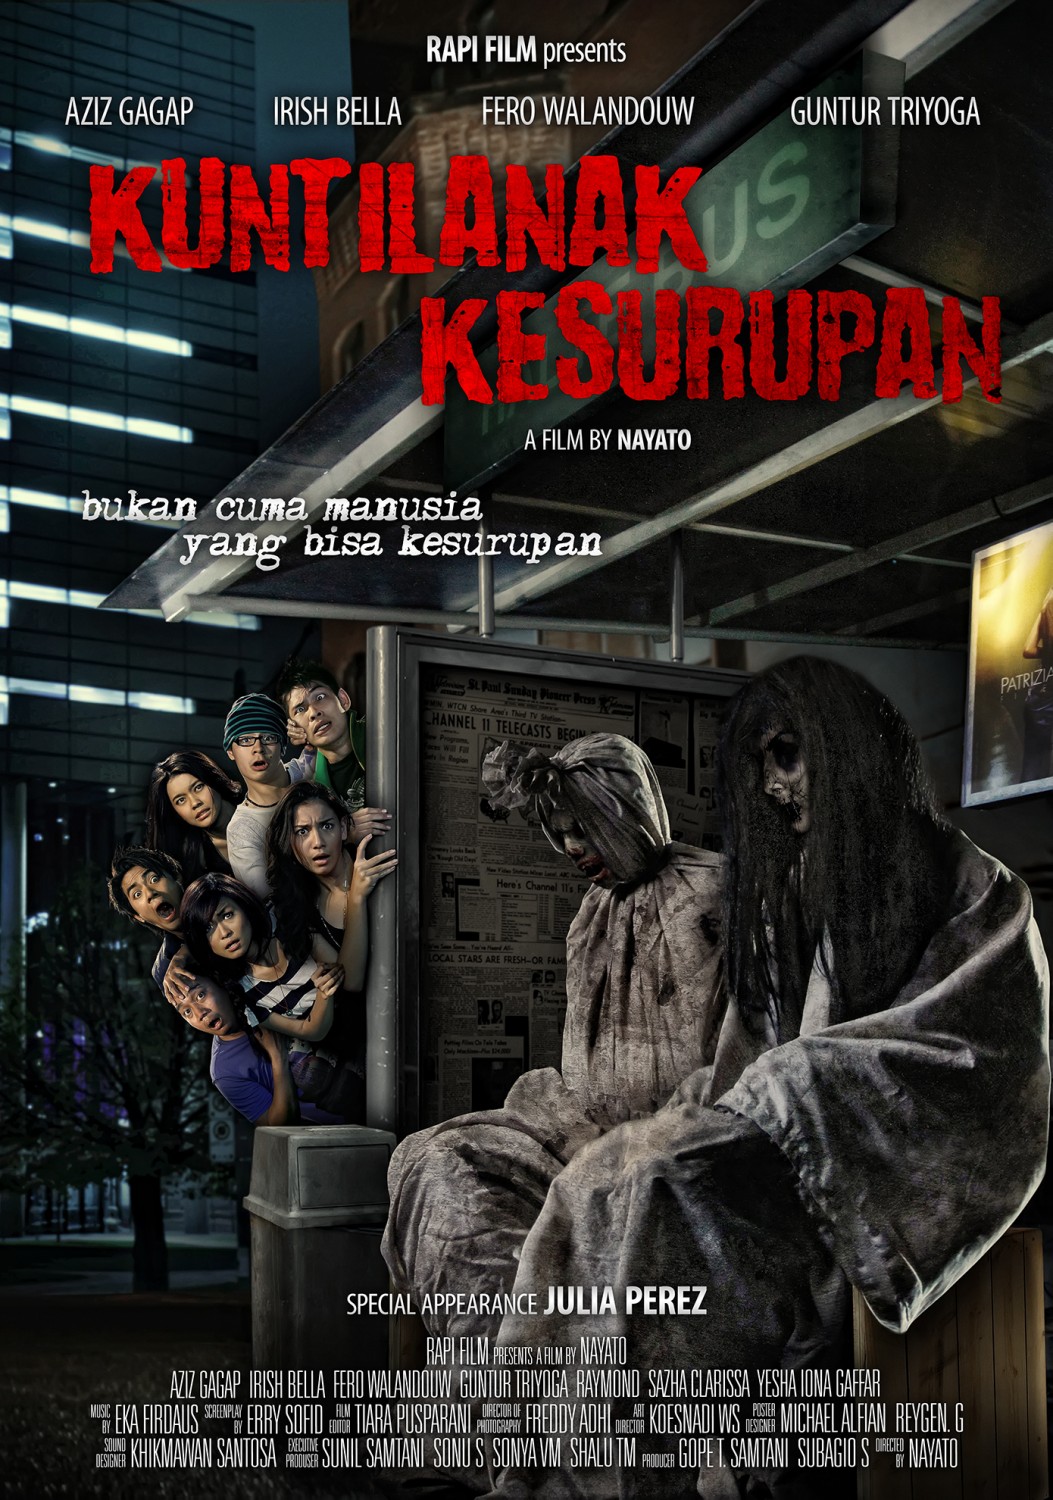 Extra Large Movie Poster Image for Kuntilanak kesurupan 